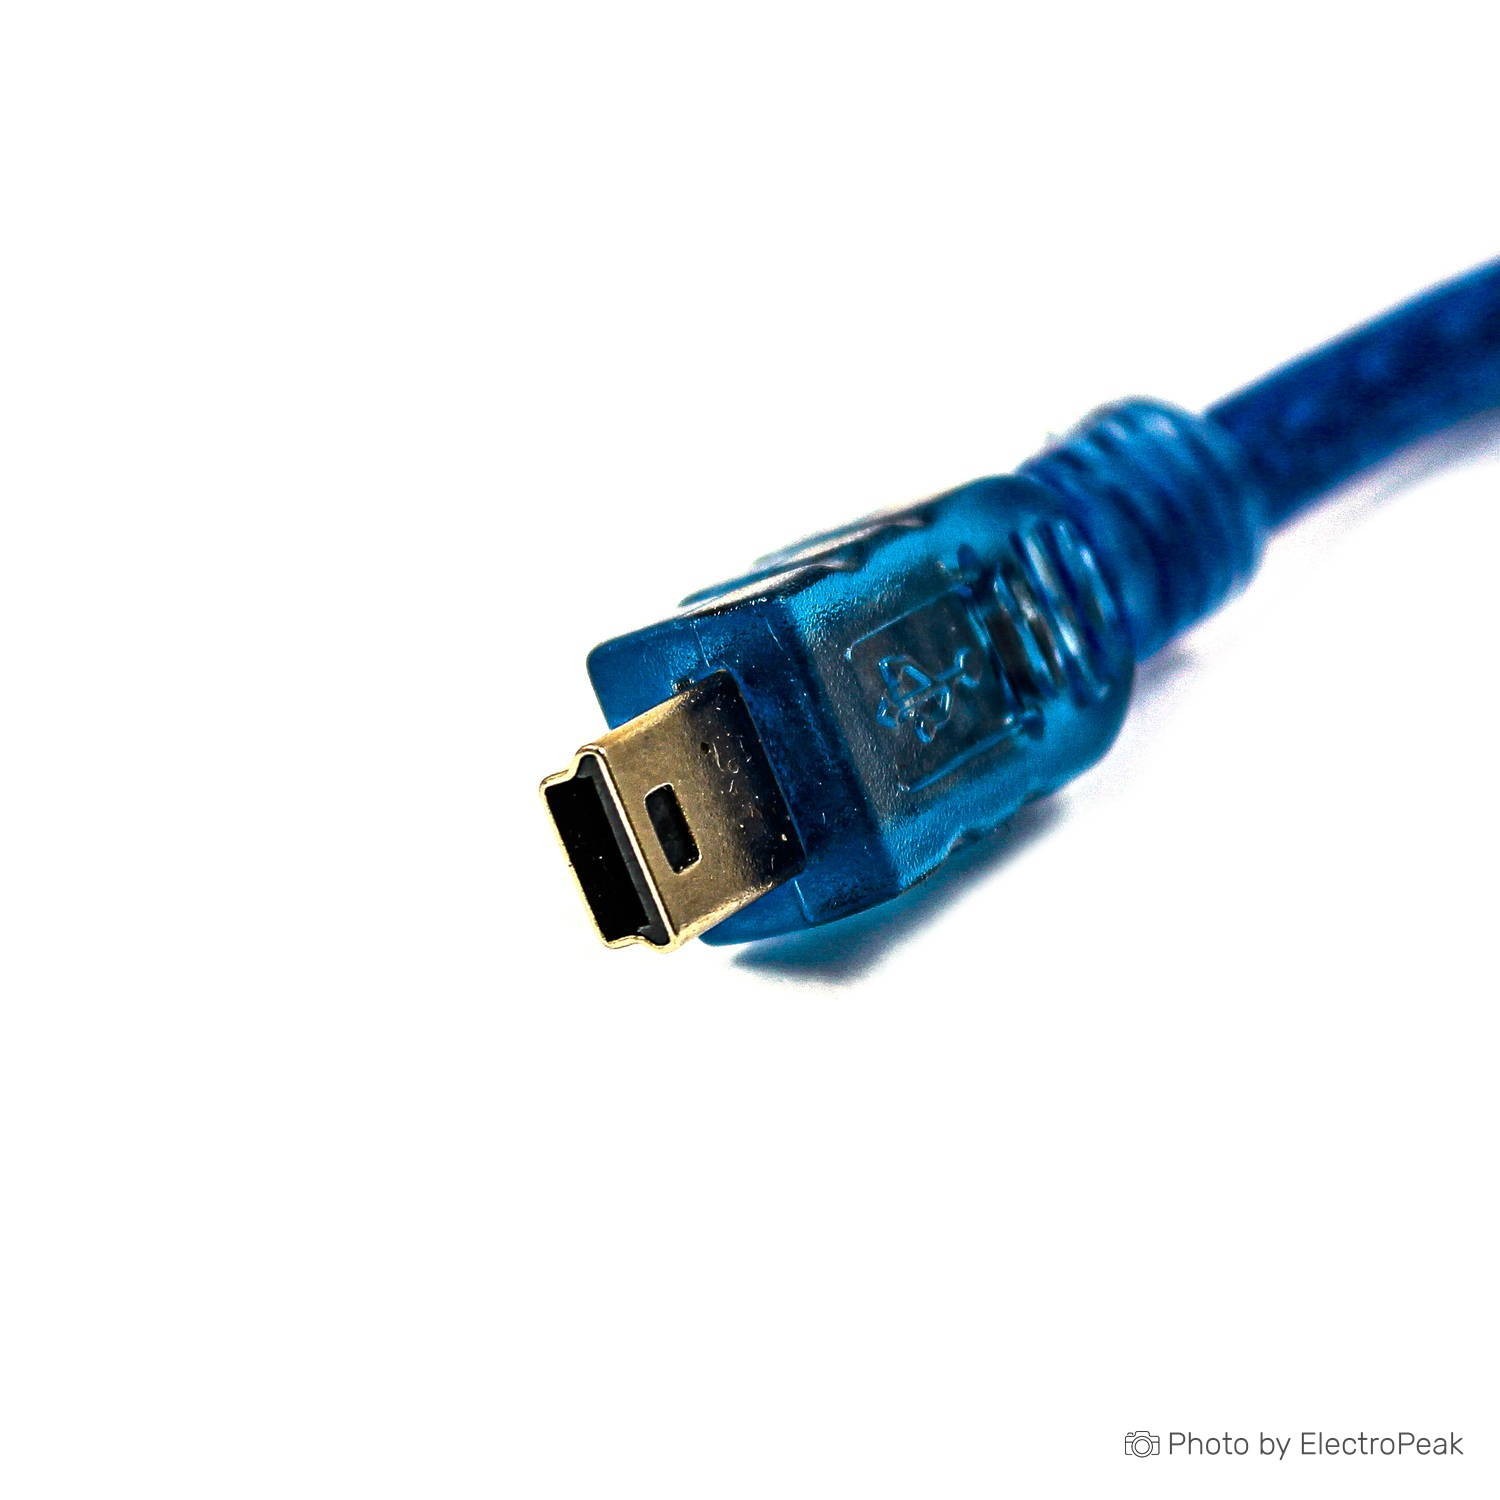 Cable for Arduino Nano (USB 2.0 A to USB 2.0 Mini B) 30cm – ielectrony